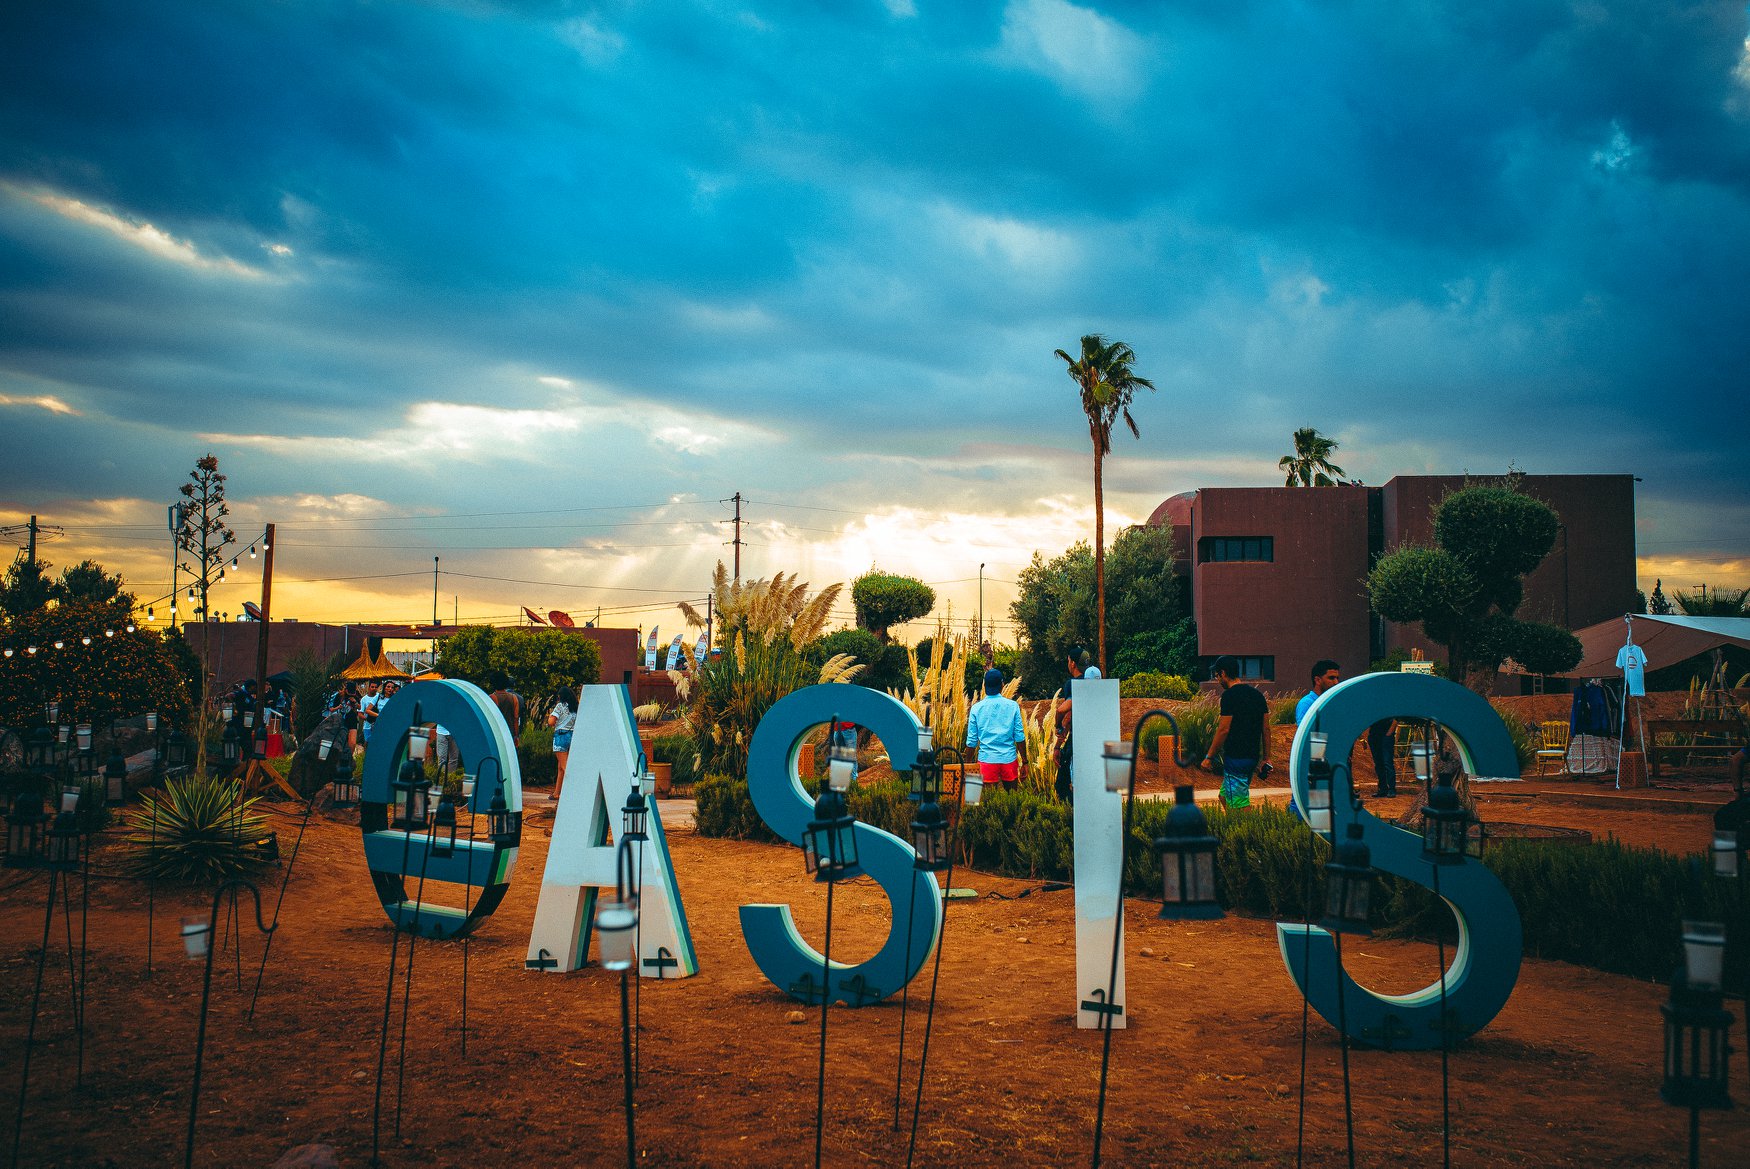 Oasis Festival